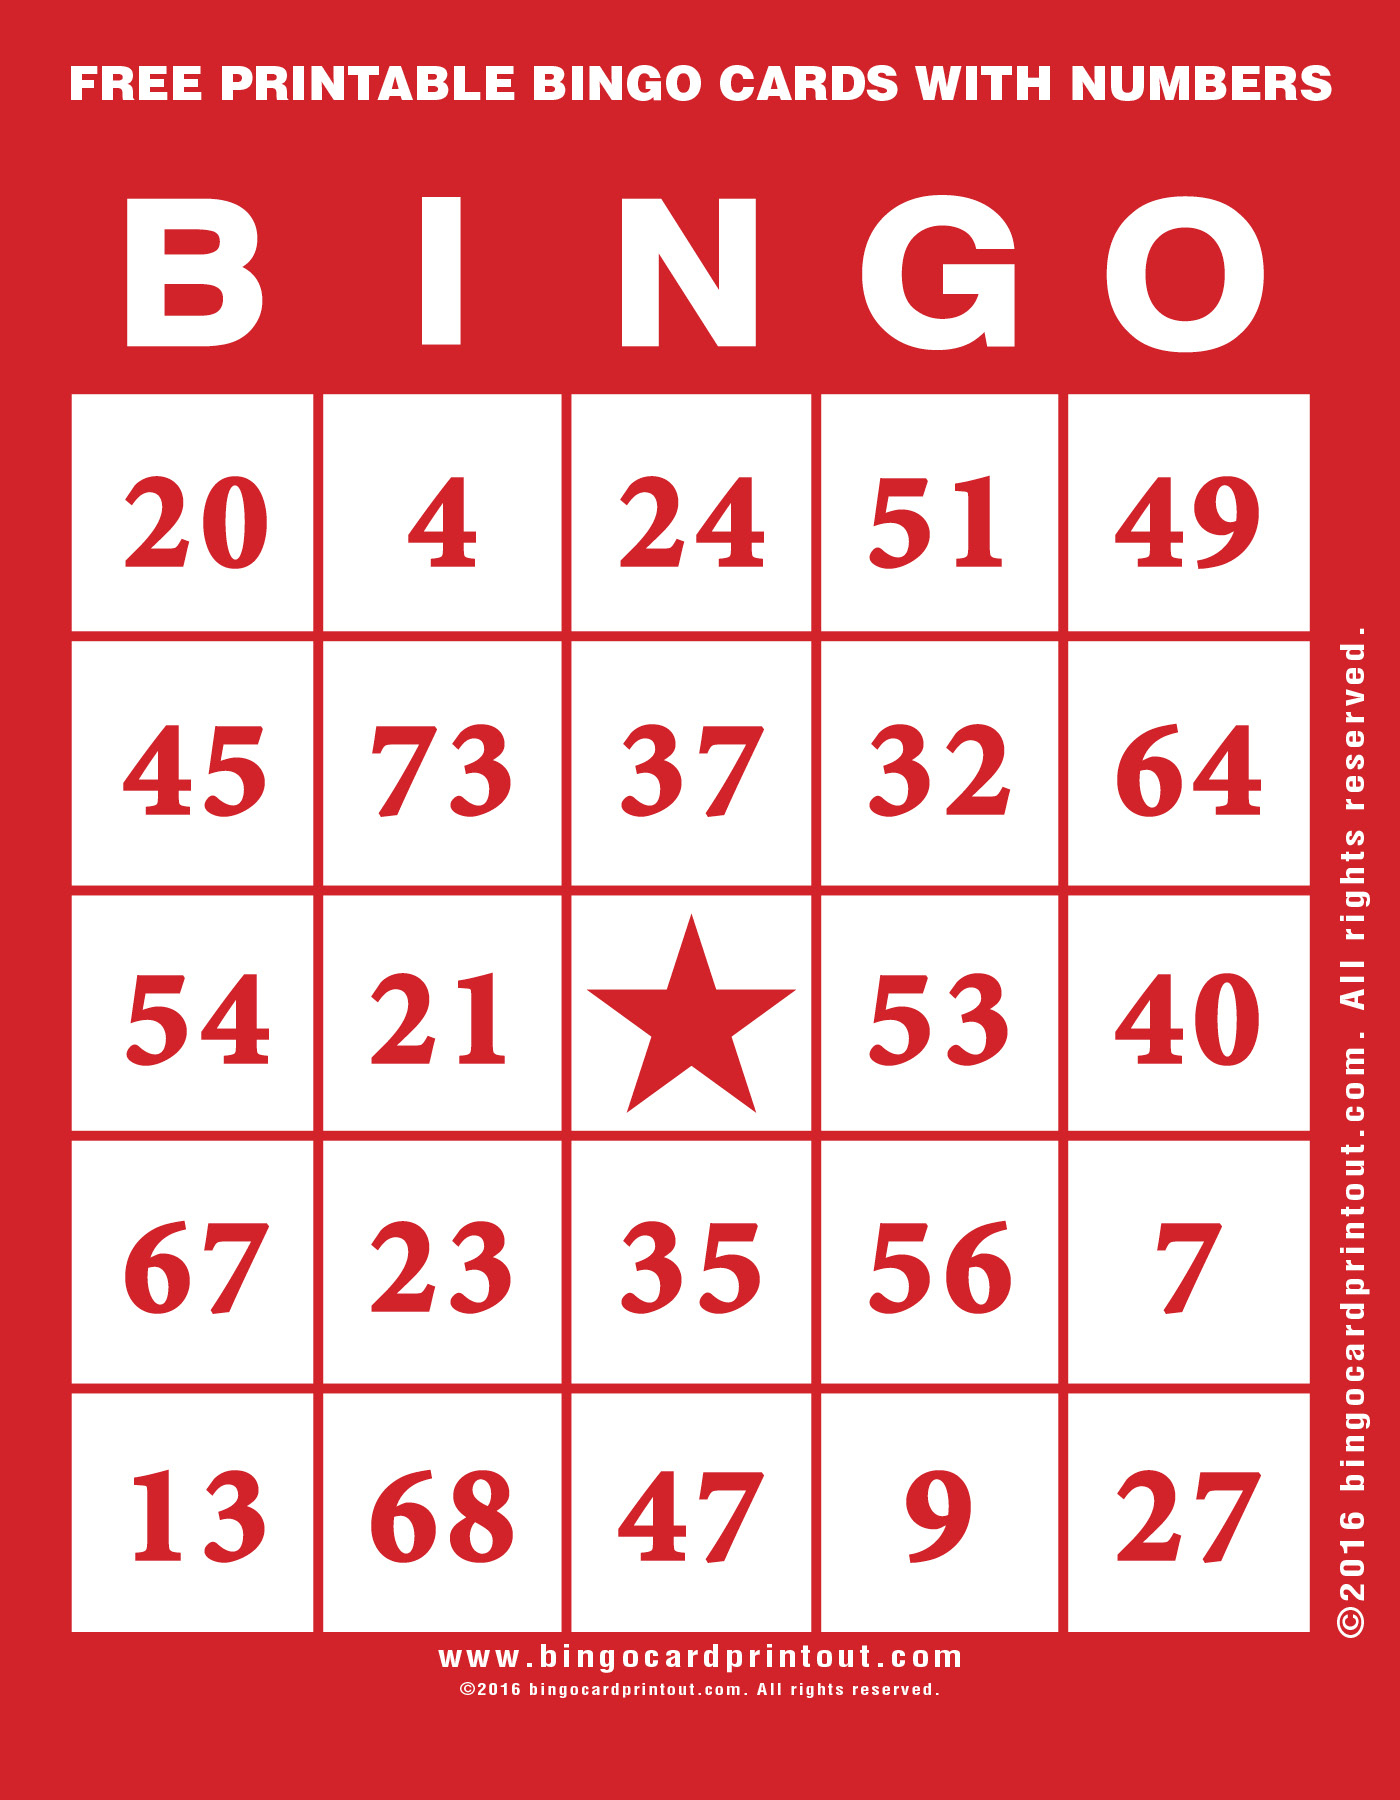 Free Printable Bingo Cards With Numbers - Bingocardprintout